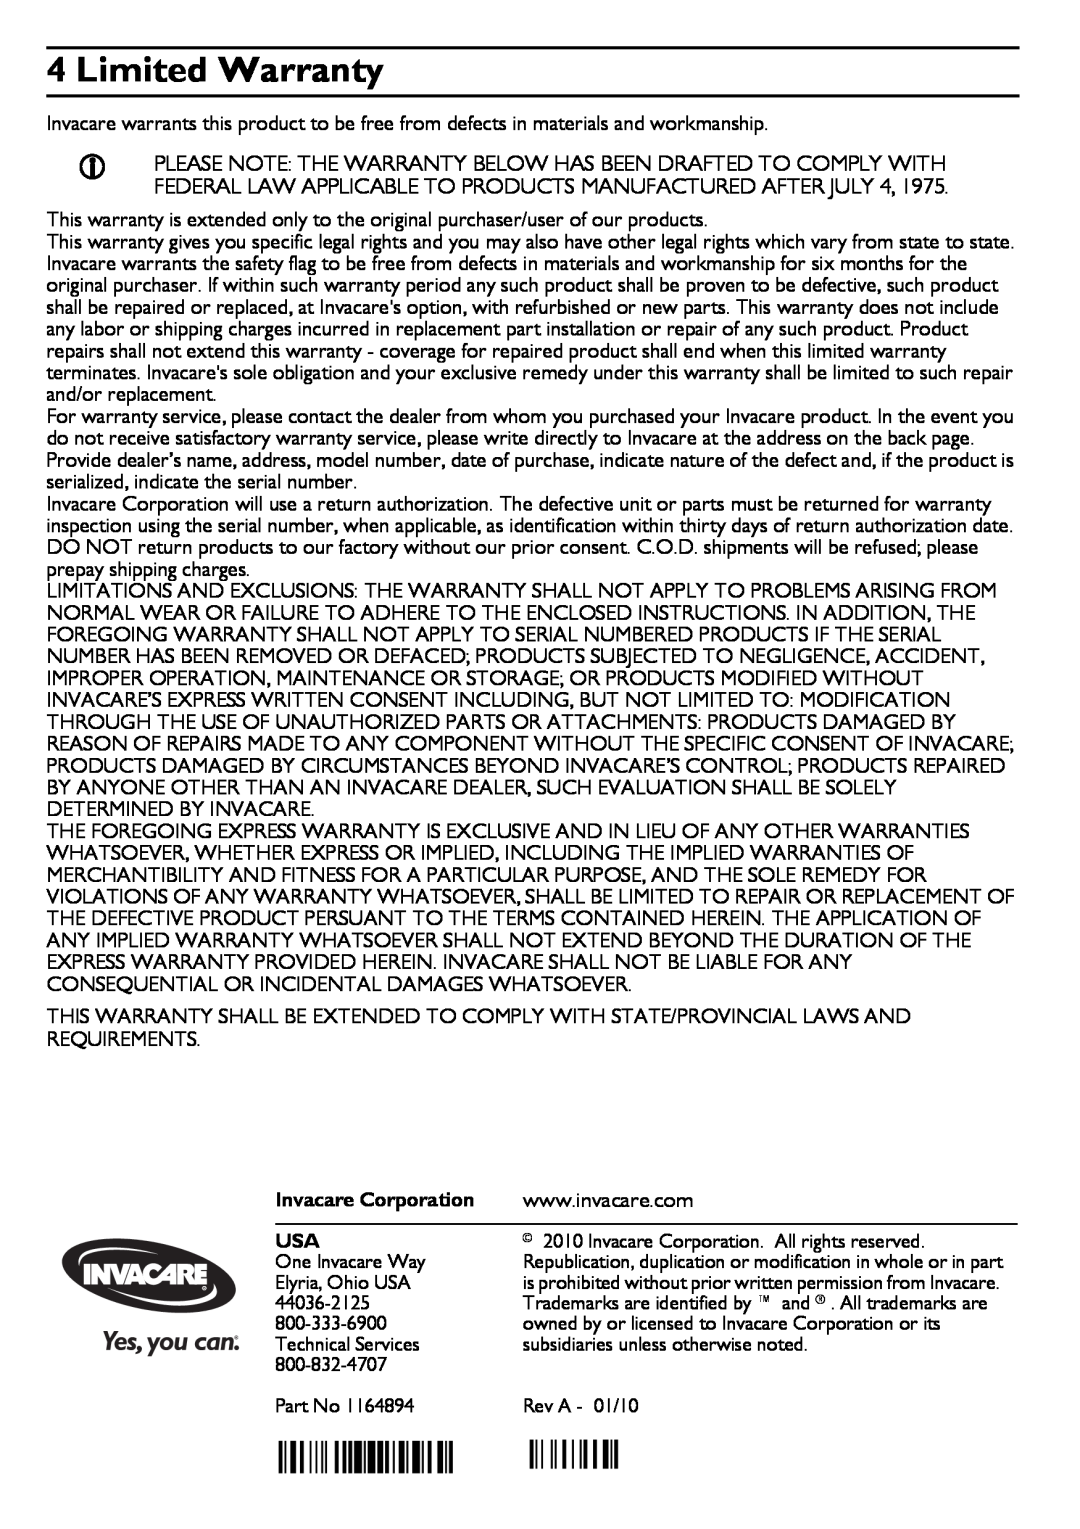 Invacare ACC140 user manual Limited Warranty, Invacare Corporation 